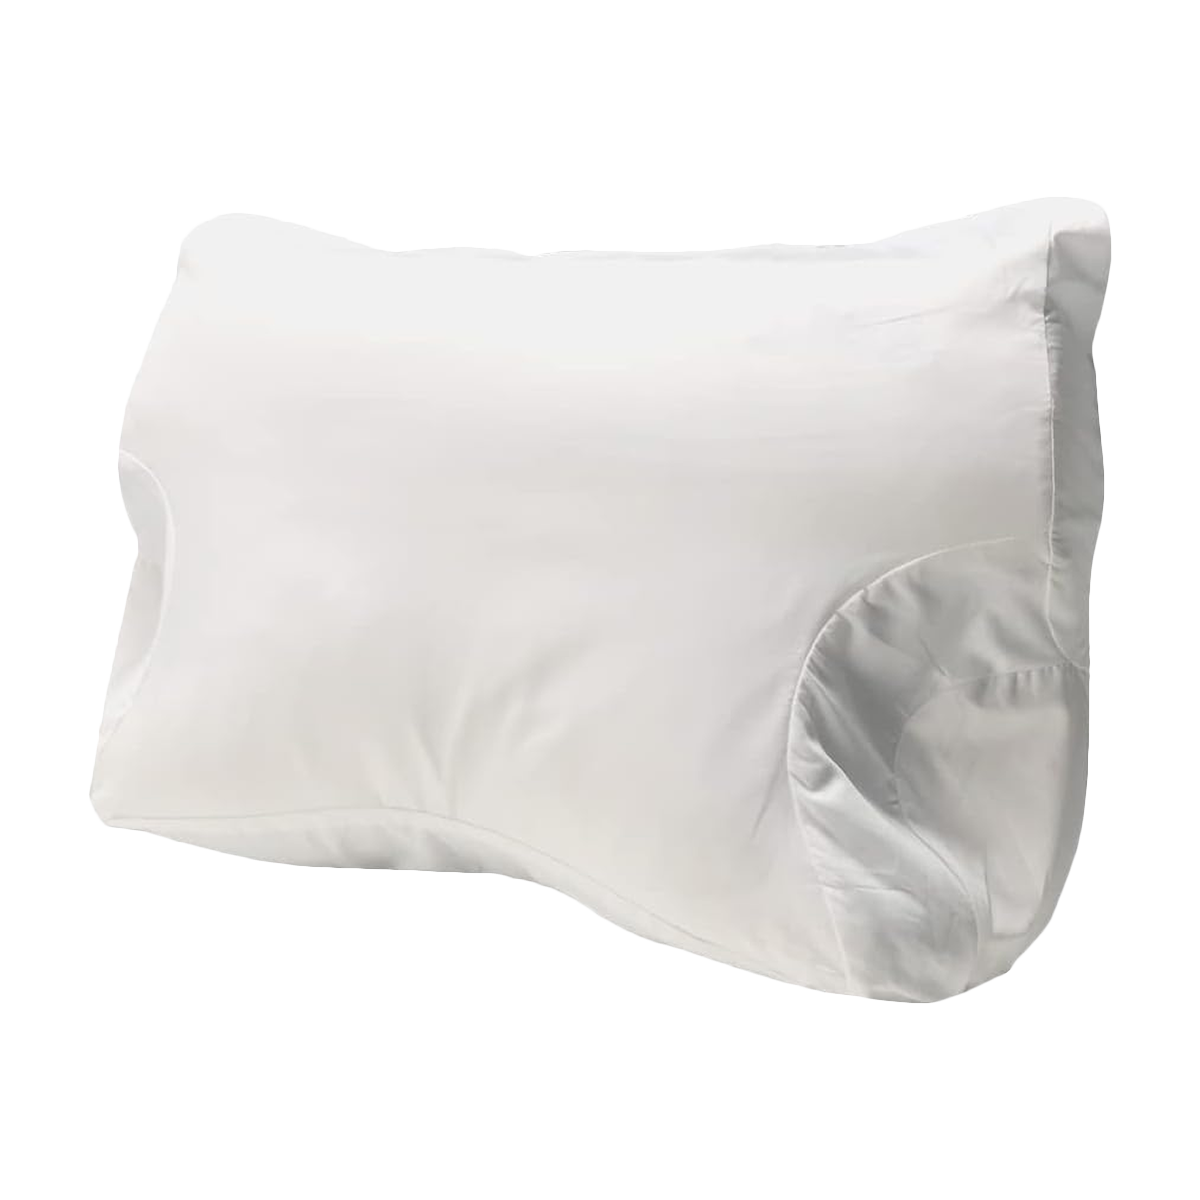 CPAPmax 2.0 Pillow Case – Sleep Doctor